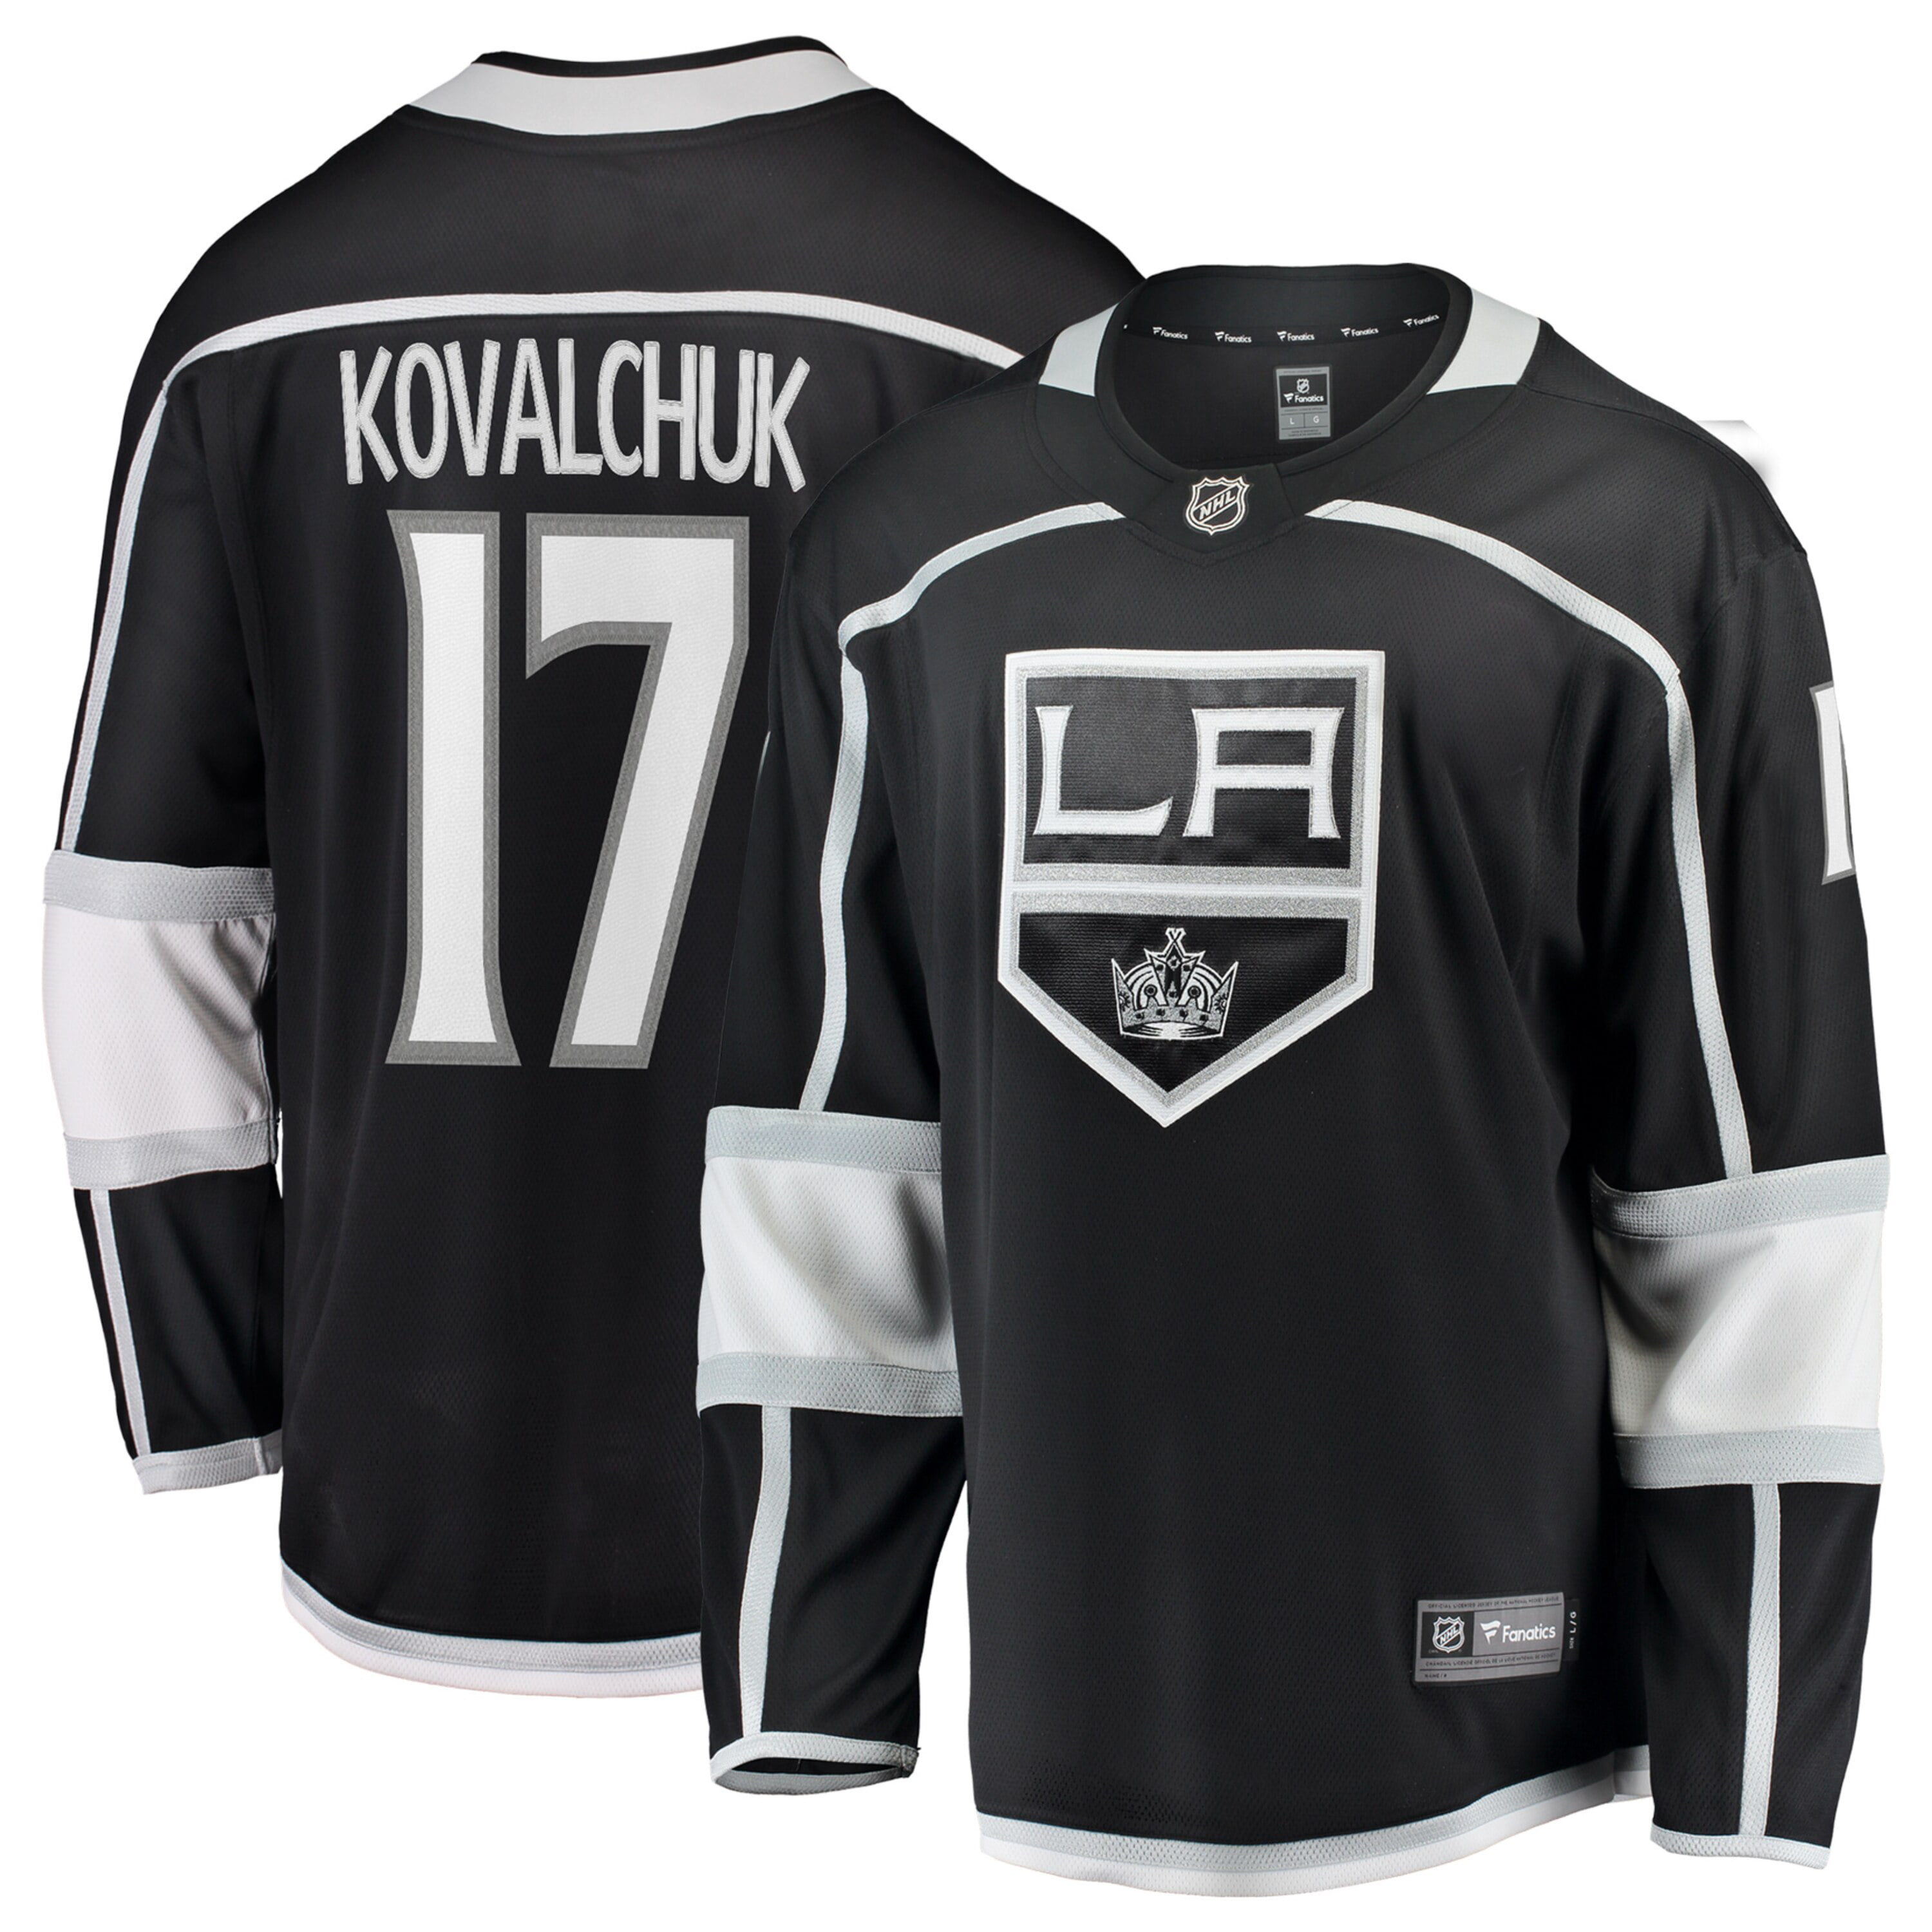 kovalchuk kings jersey